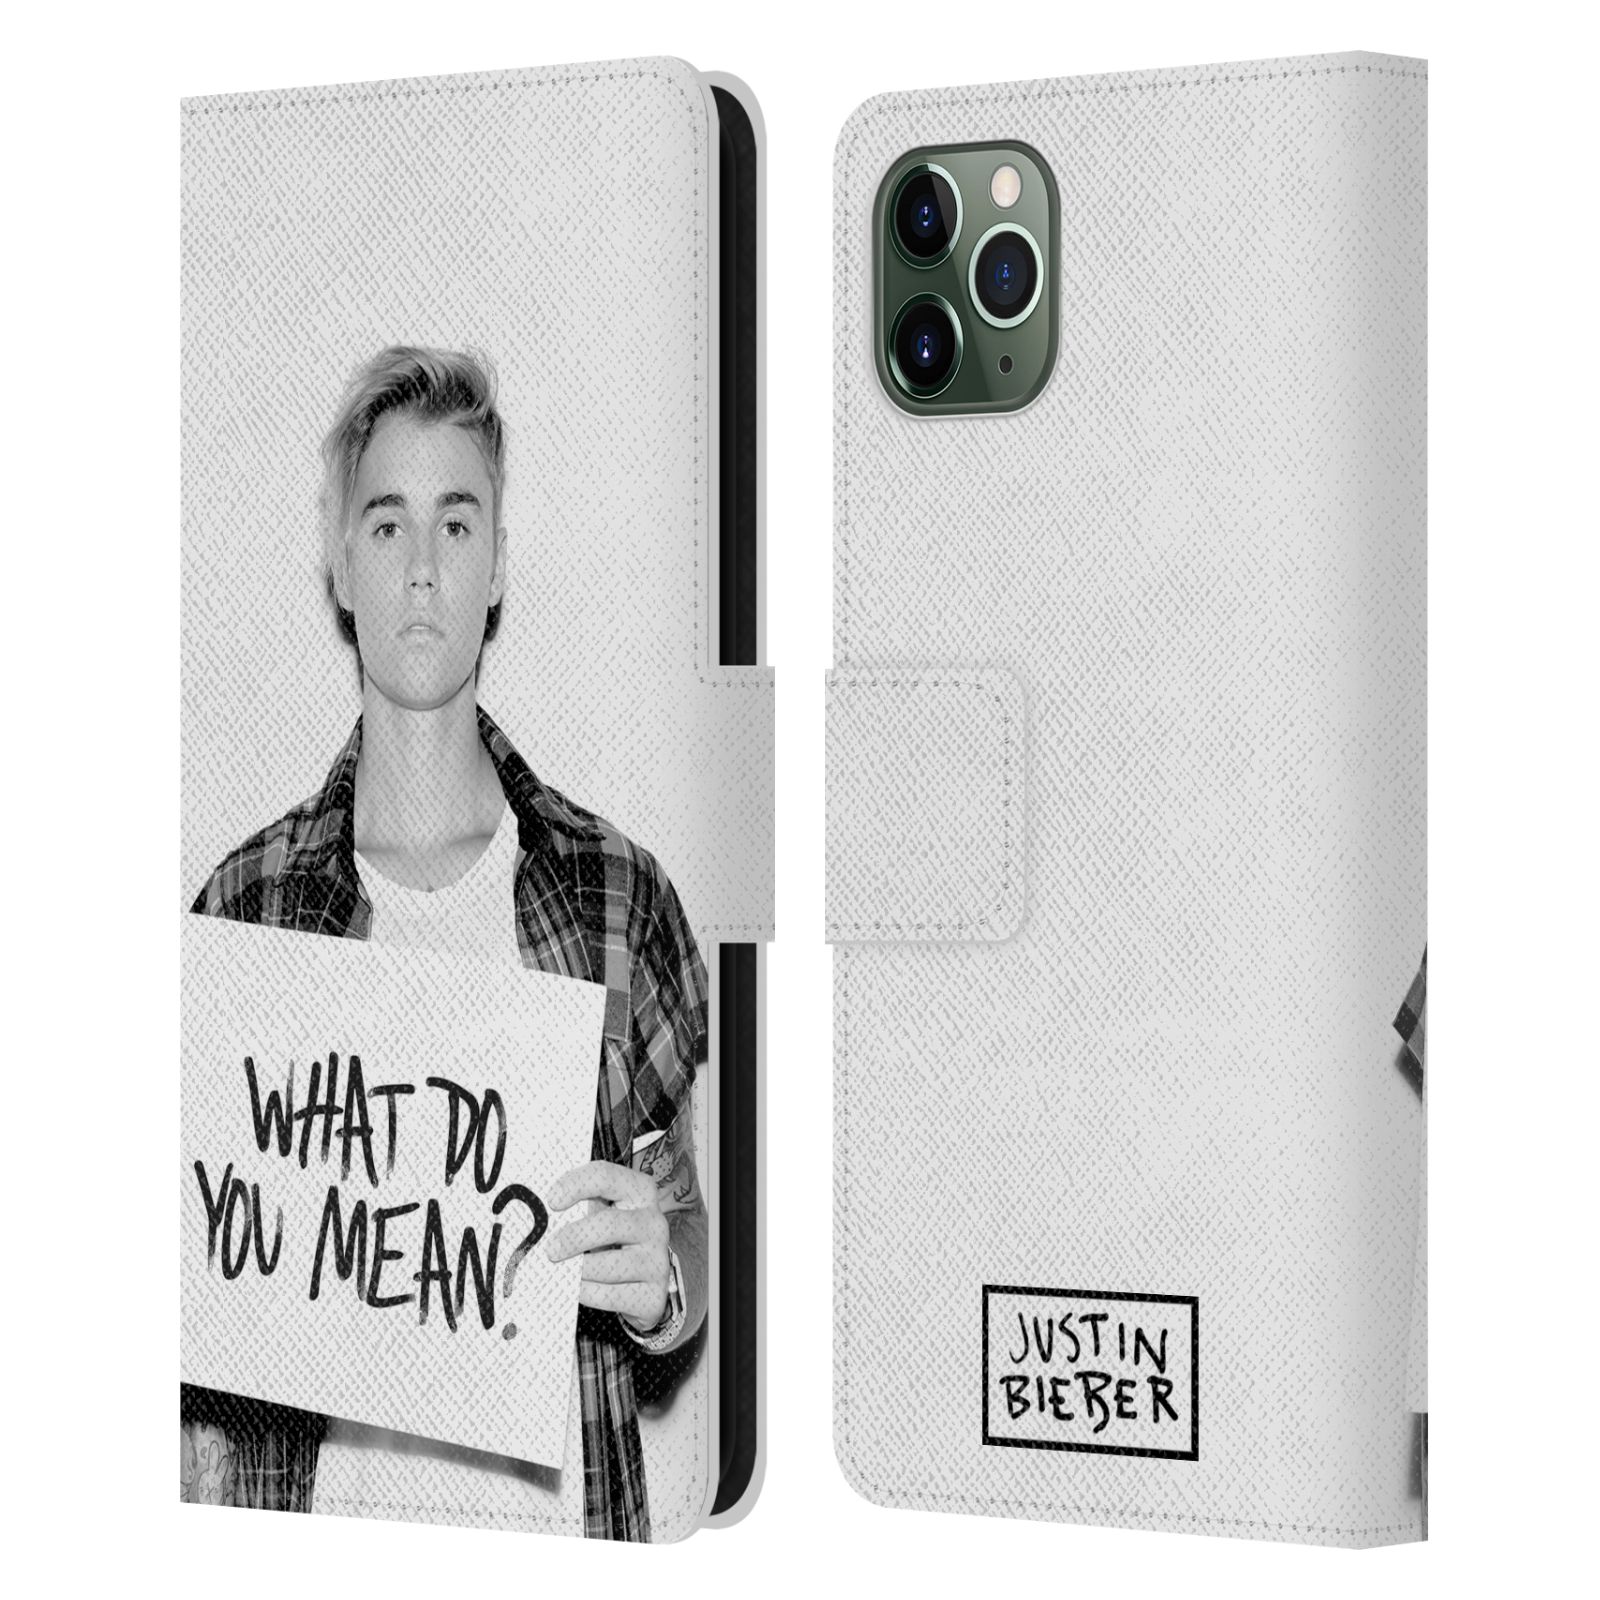 Pouzdro na mobil Apple Iphone 11 PRO MAX - Head Case - Justin Bieber - Foto What Do You Mean